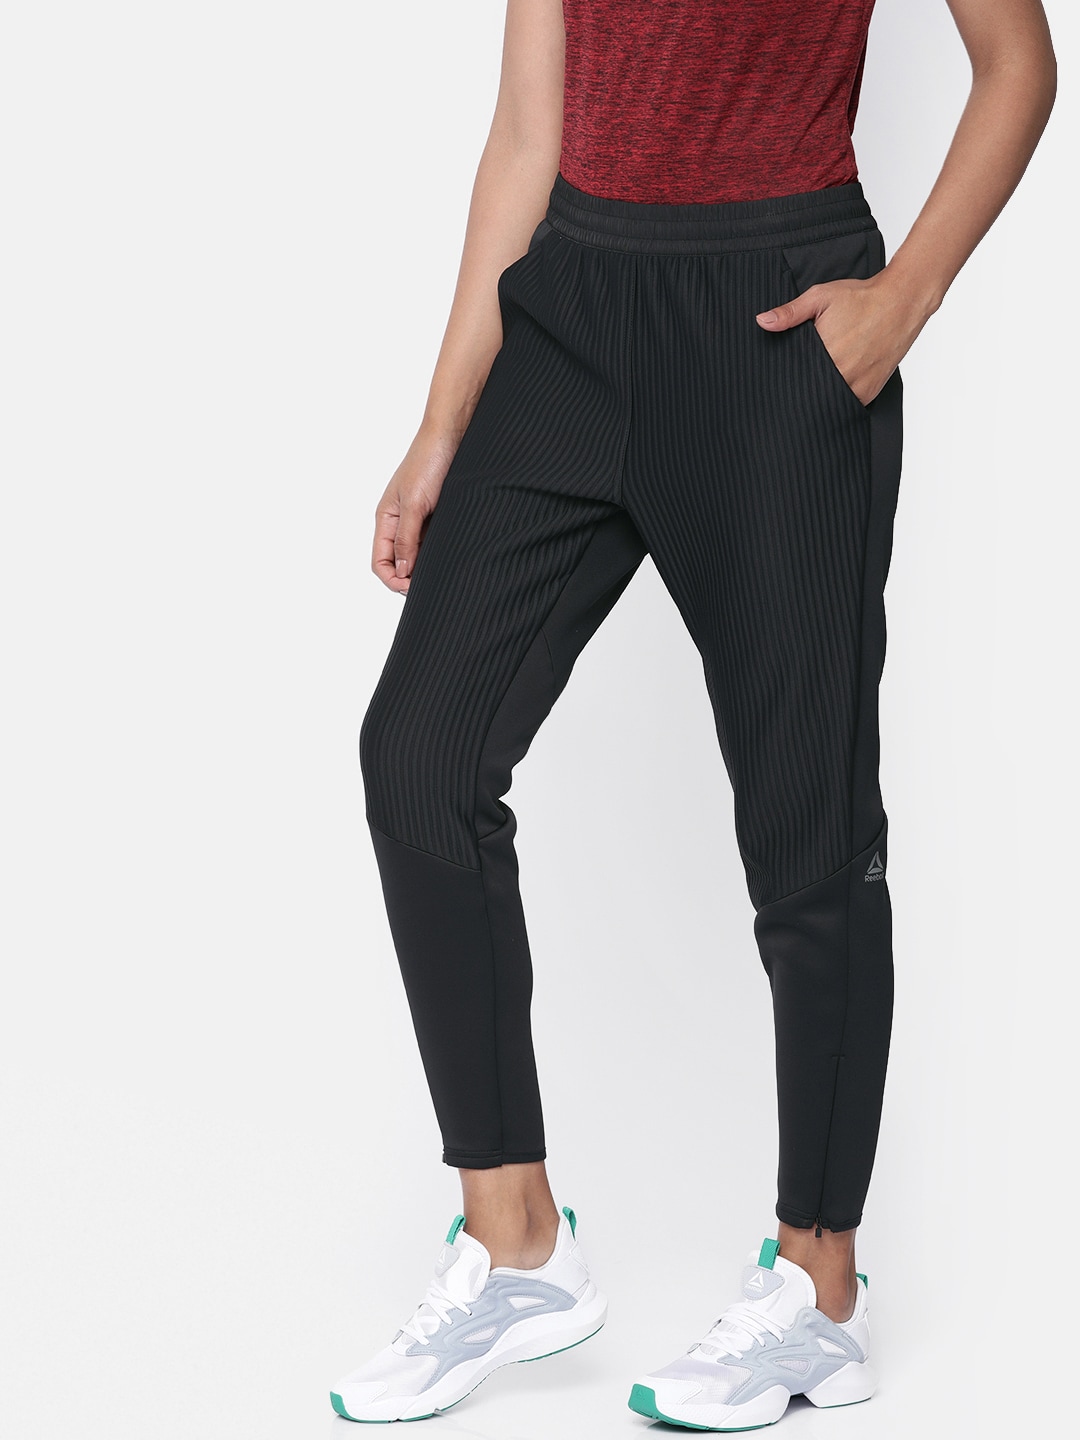 Reebok Women Black Solid Slim Fit Training Track Pants Price in India